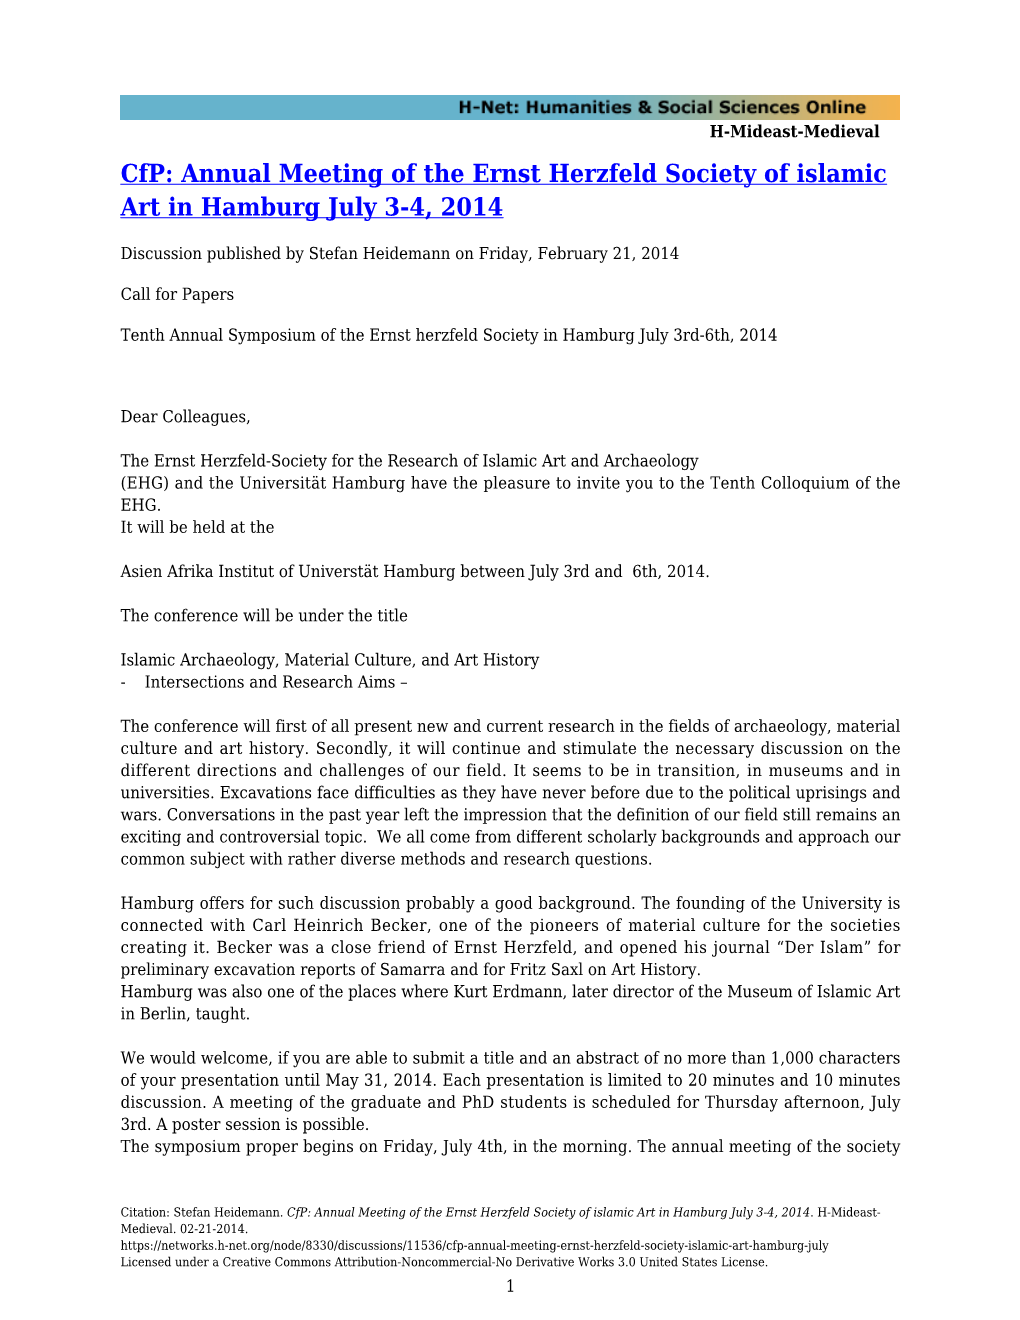 Annual Meeting of the Ernst Herzfeld Society of Islamic Art in Hamburg July 3-4, 2014